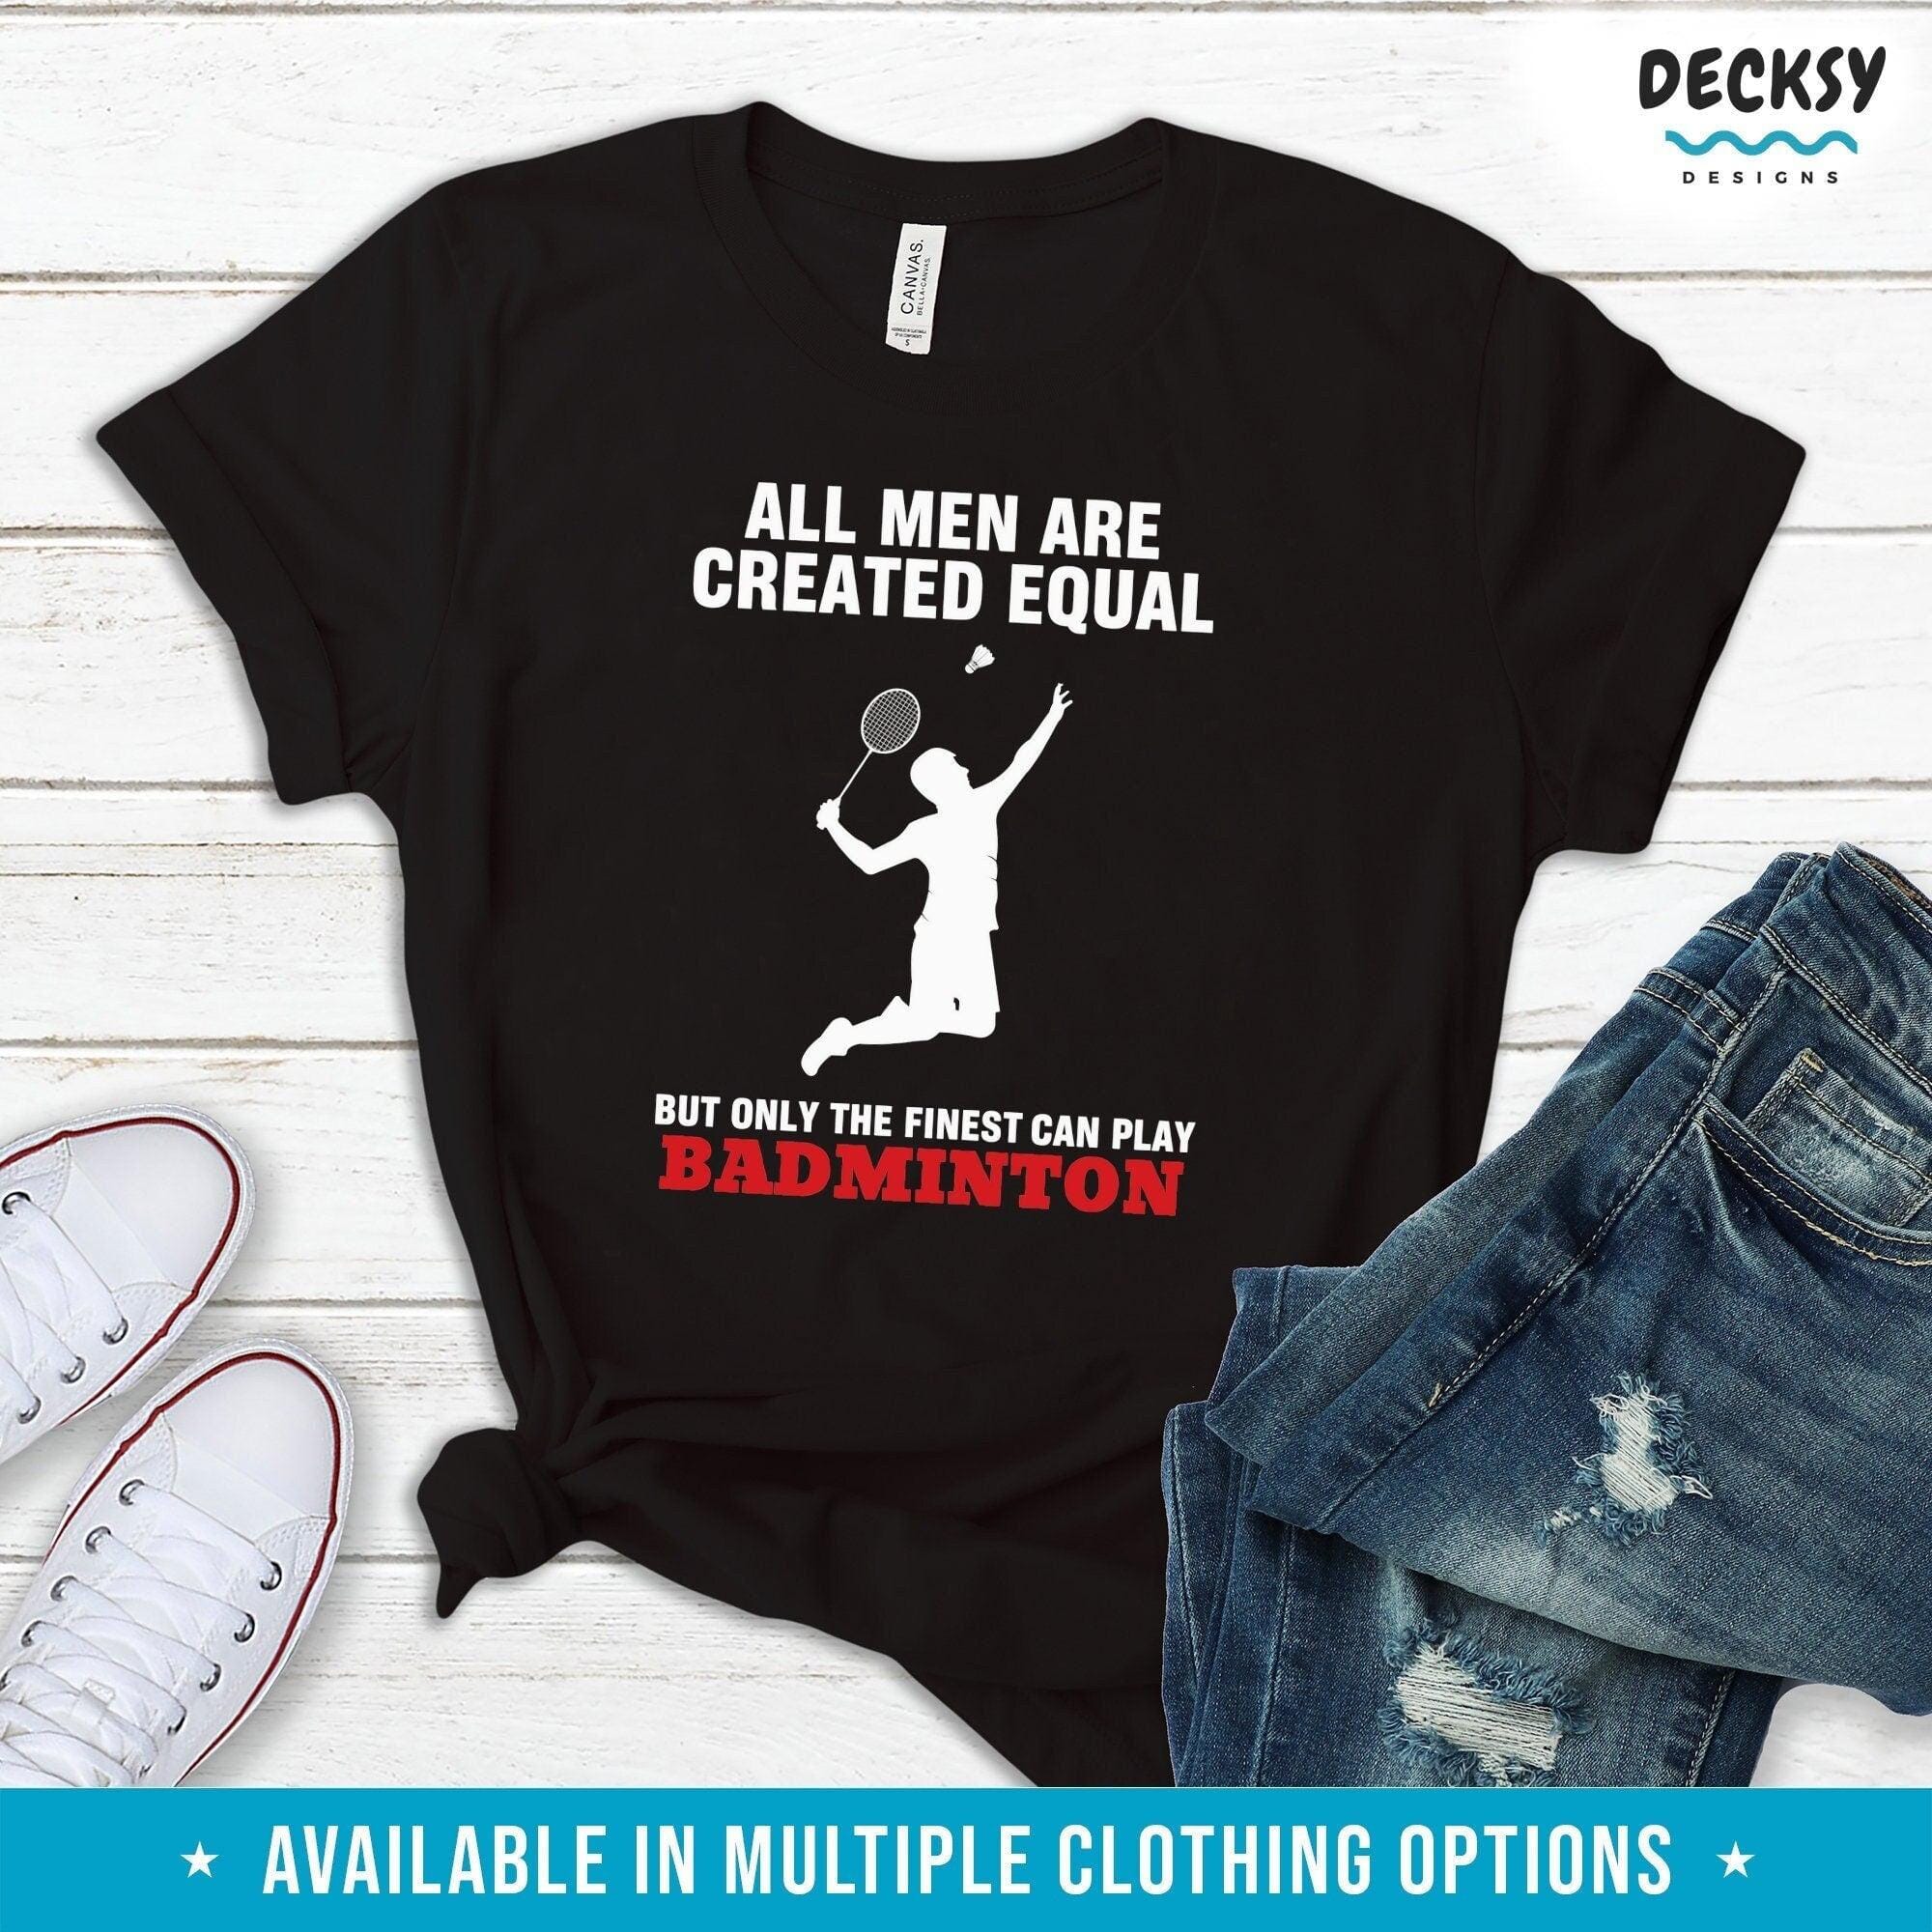 Badminton Shirt Men, Badminton Player Gift-Clothing:Gender-Neutral Adult Clothing:Tops & Tees:T-shirts:Graphic Tees-DecksyDesigns